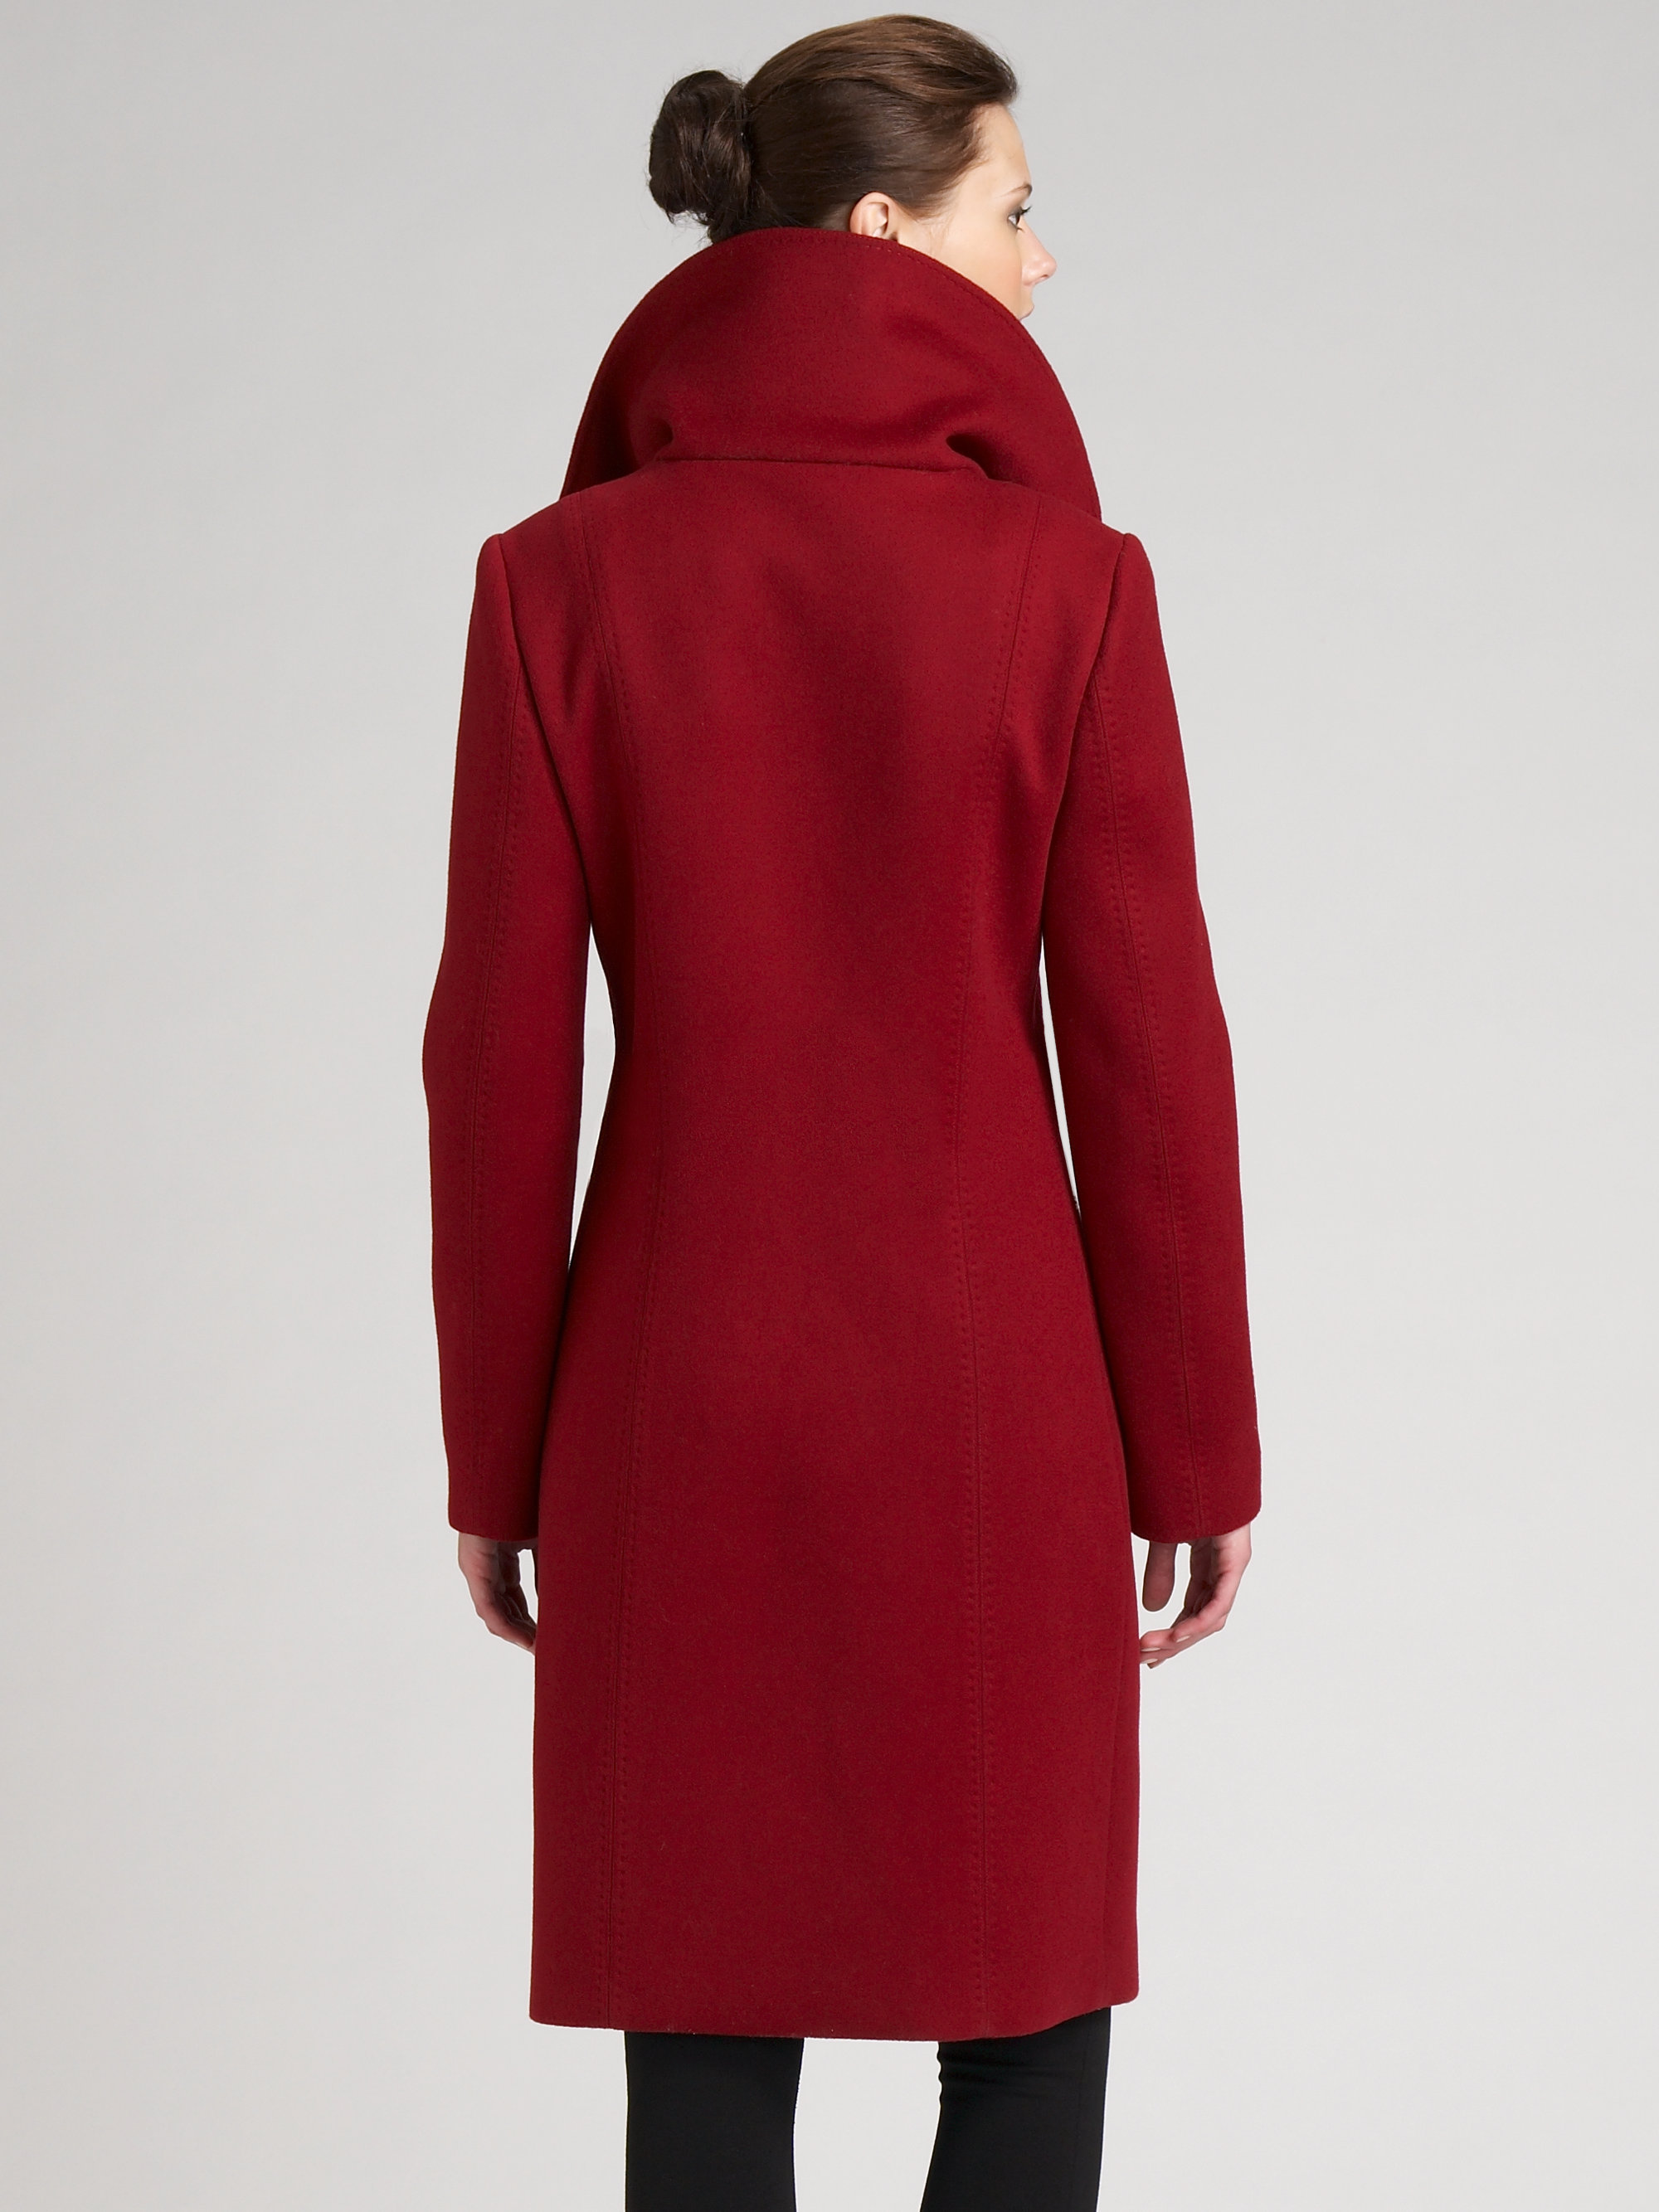 Elie Tahari Adriel Doubleface Wool Coat in Red - Lyst